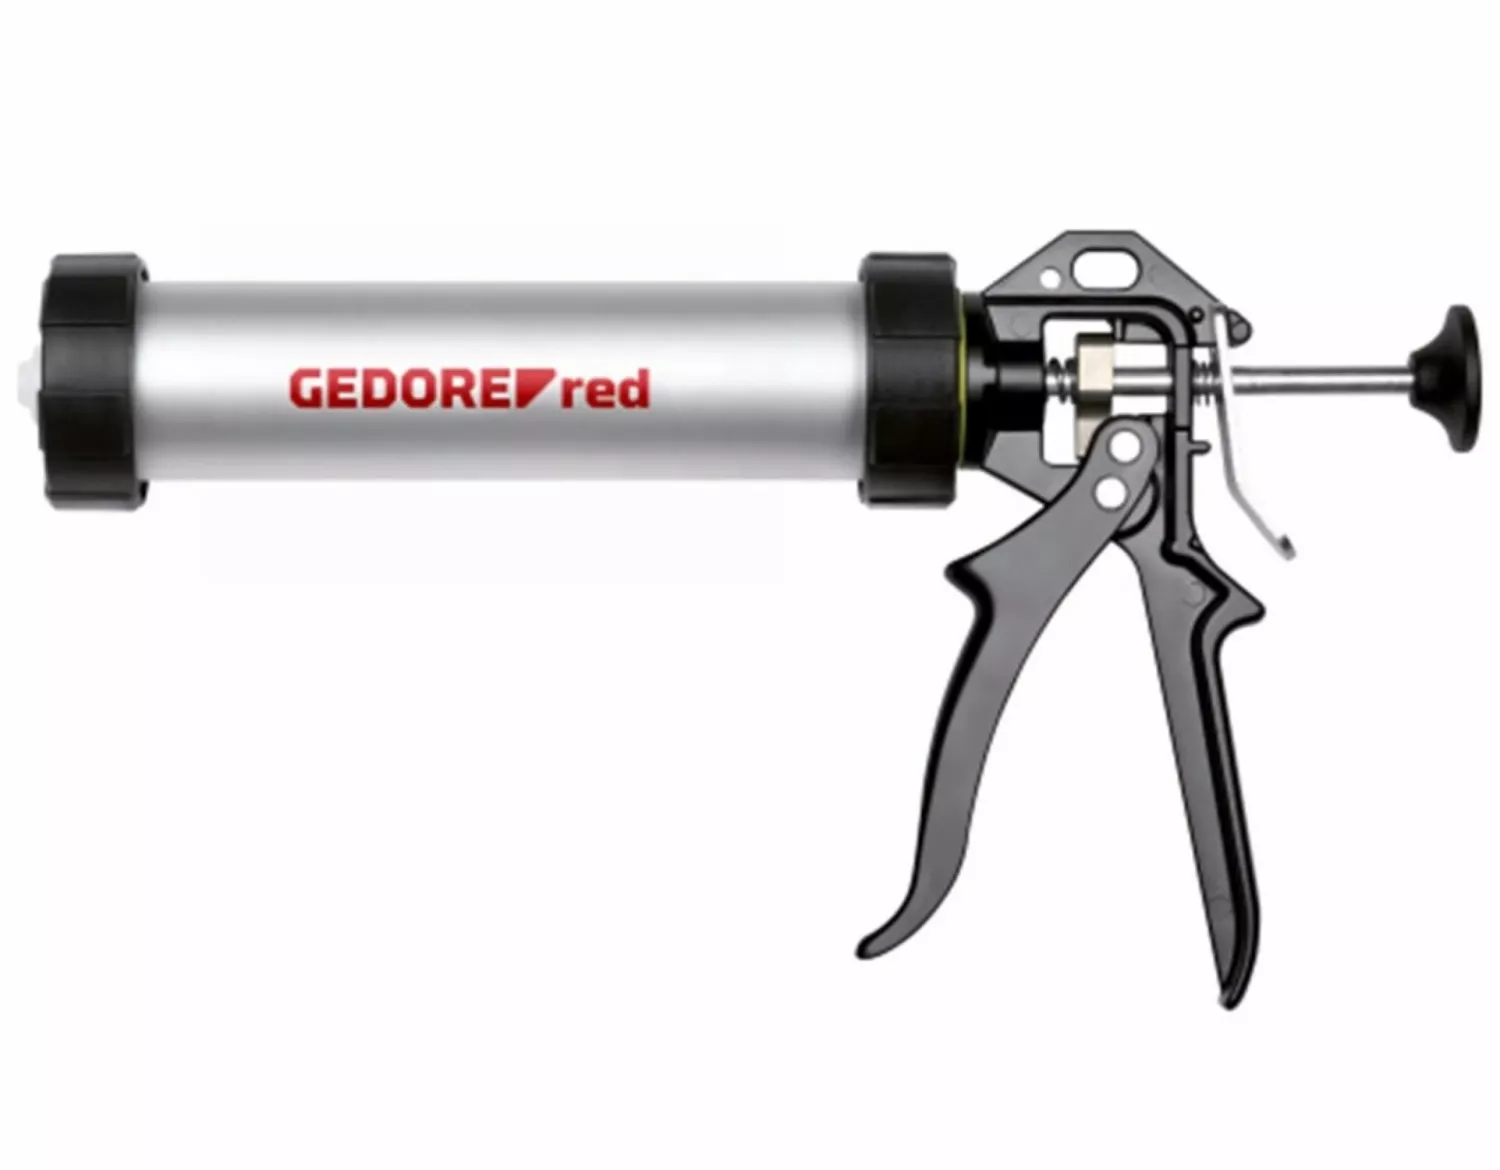 Gedore RED R99210000  Pistolet en kit  - 310ml